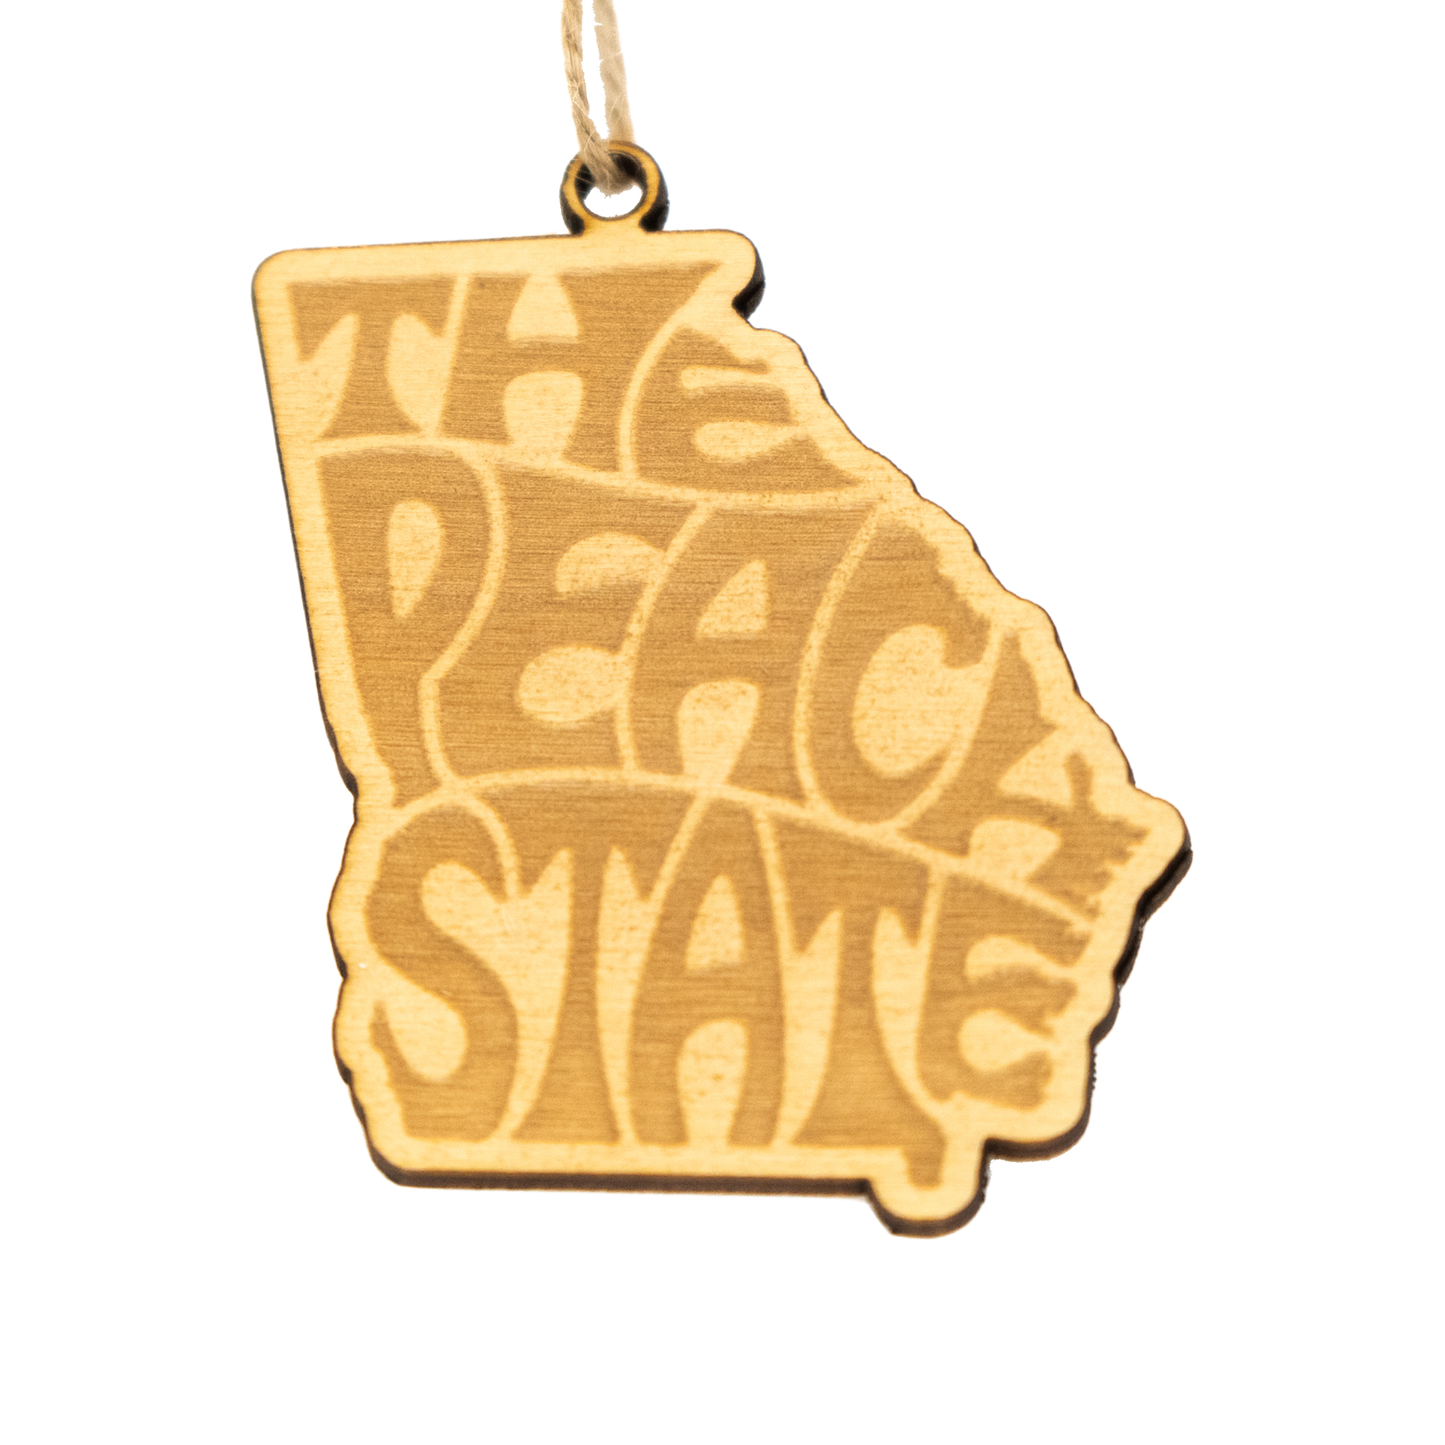 Georgia State Nickname Ornament